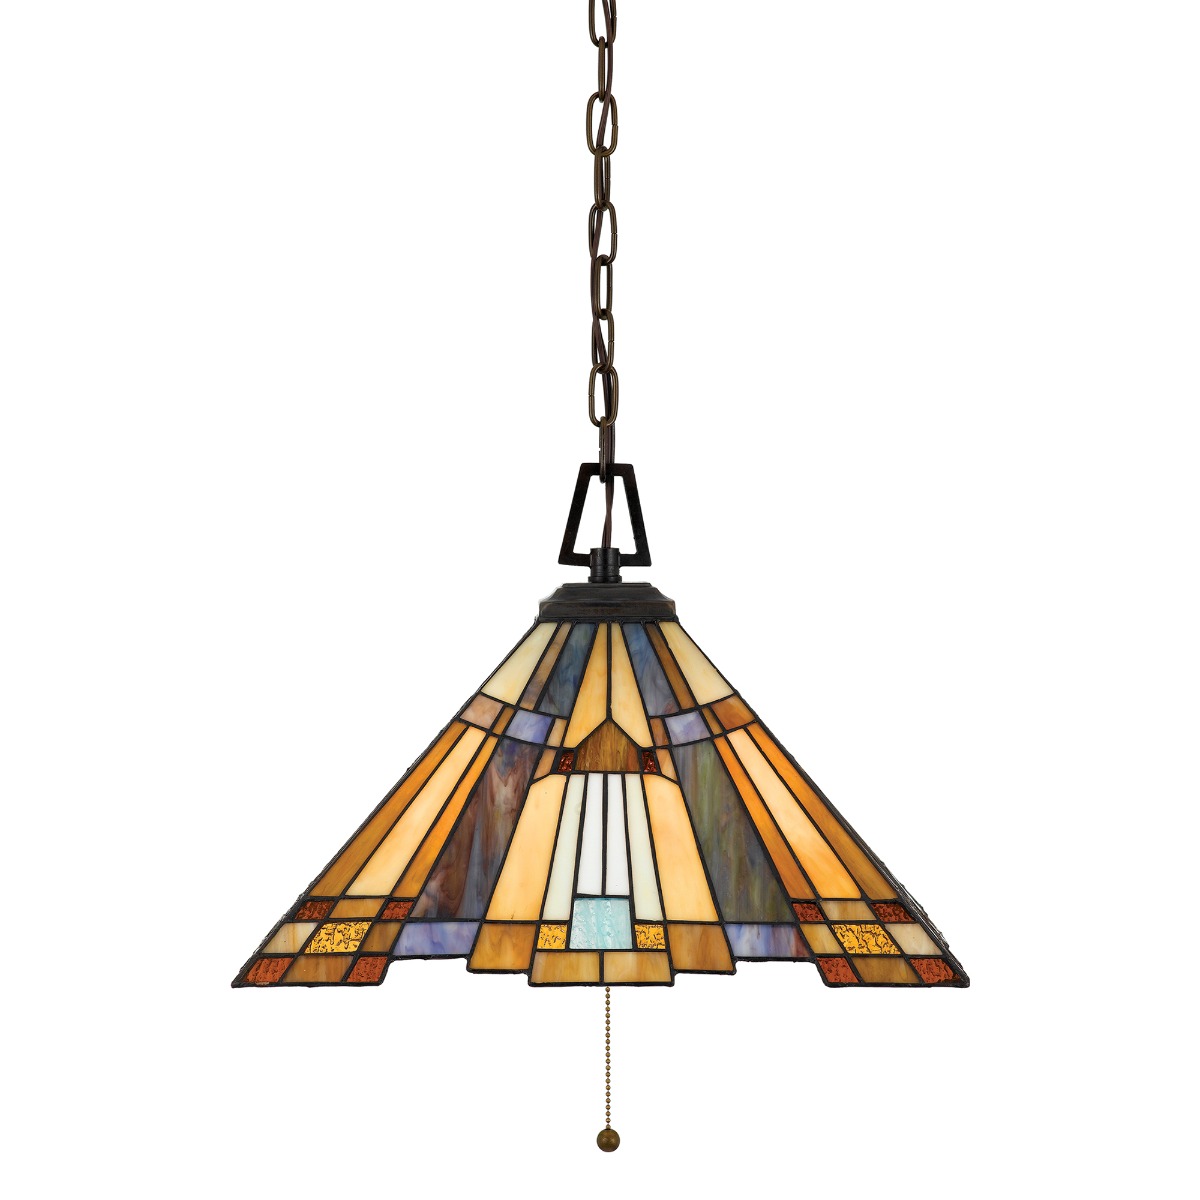 Image of QZ-INGLENOOK-P-A Inglenook 3 Light Tiffany Hanging Ceiling Pendant